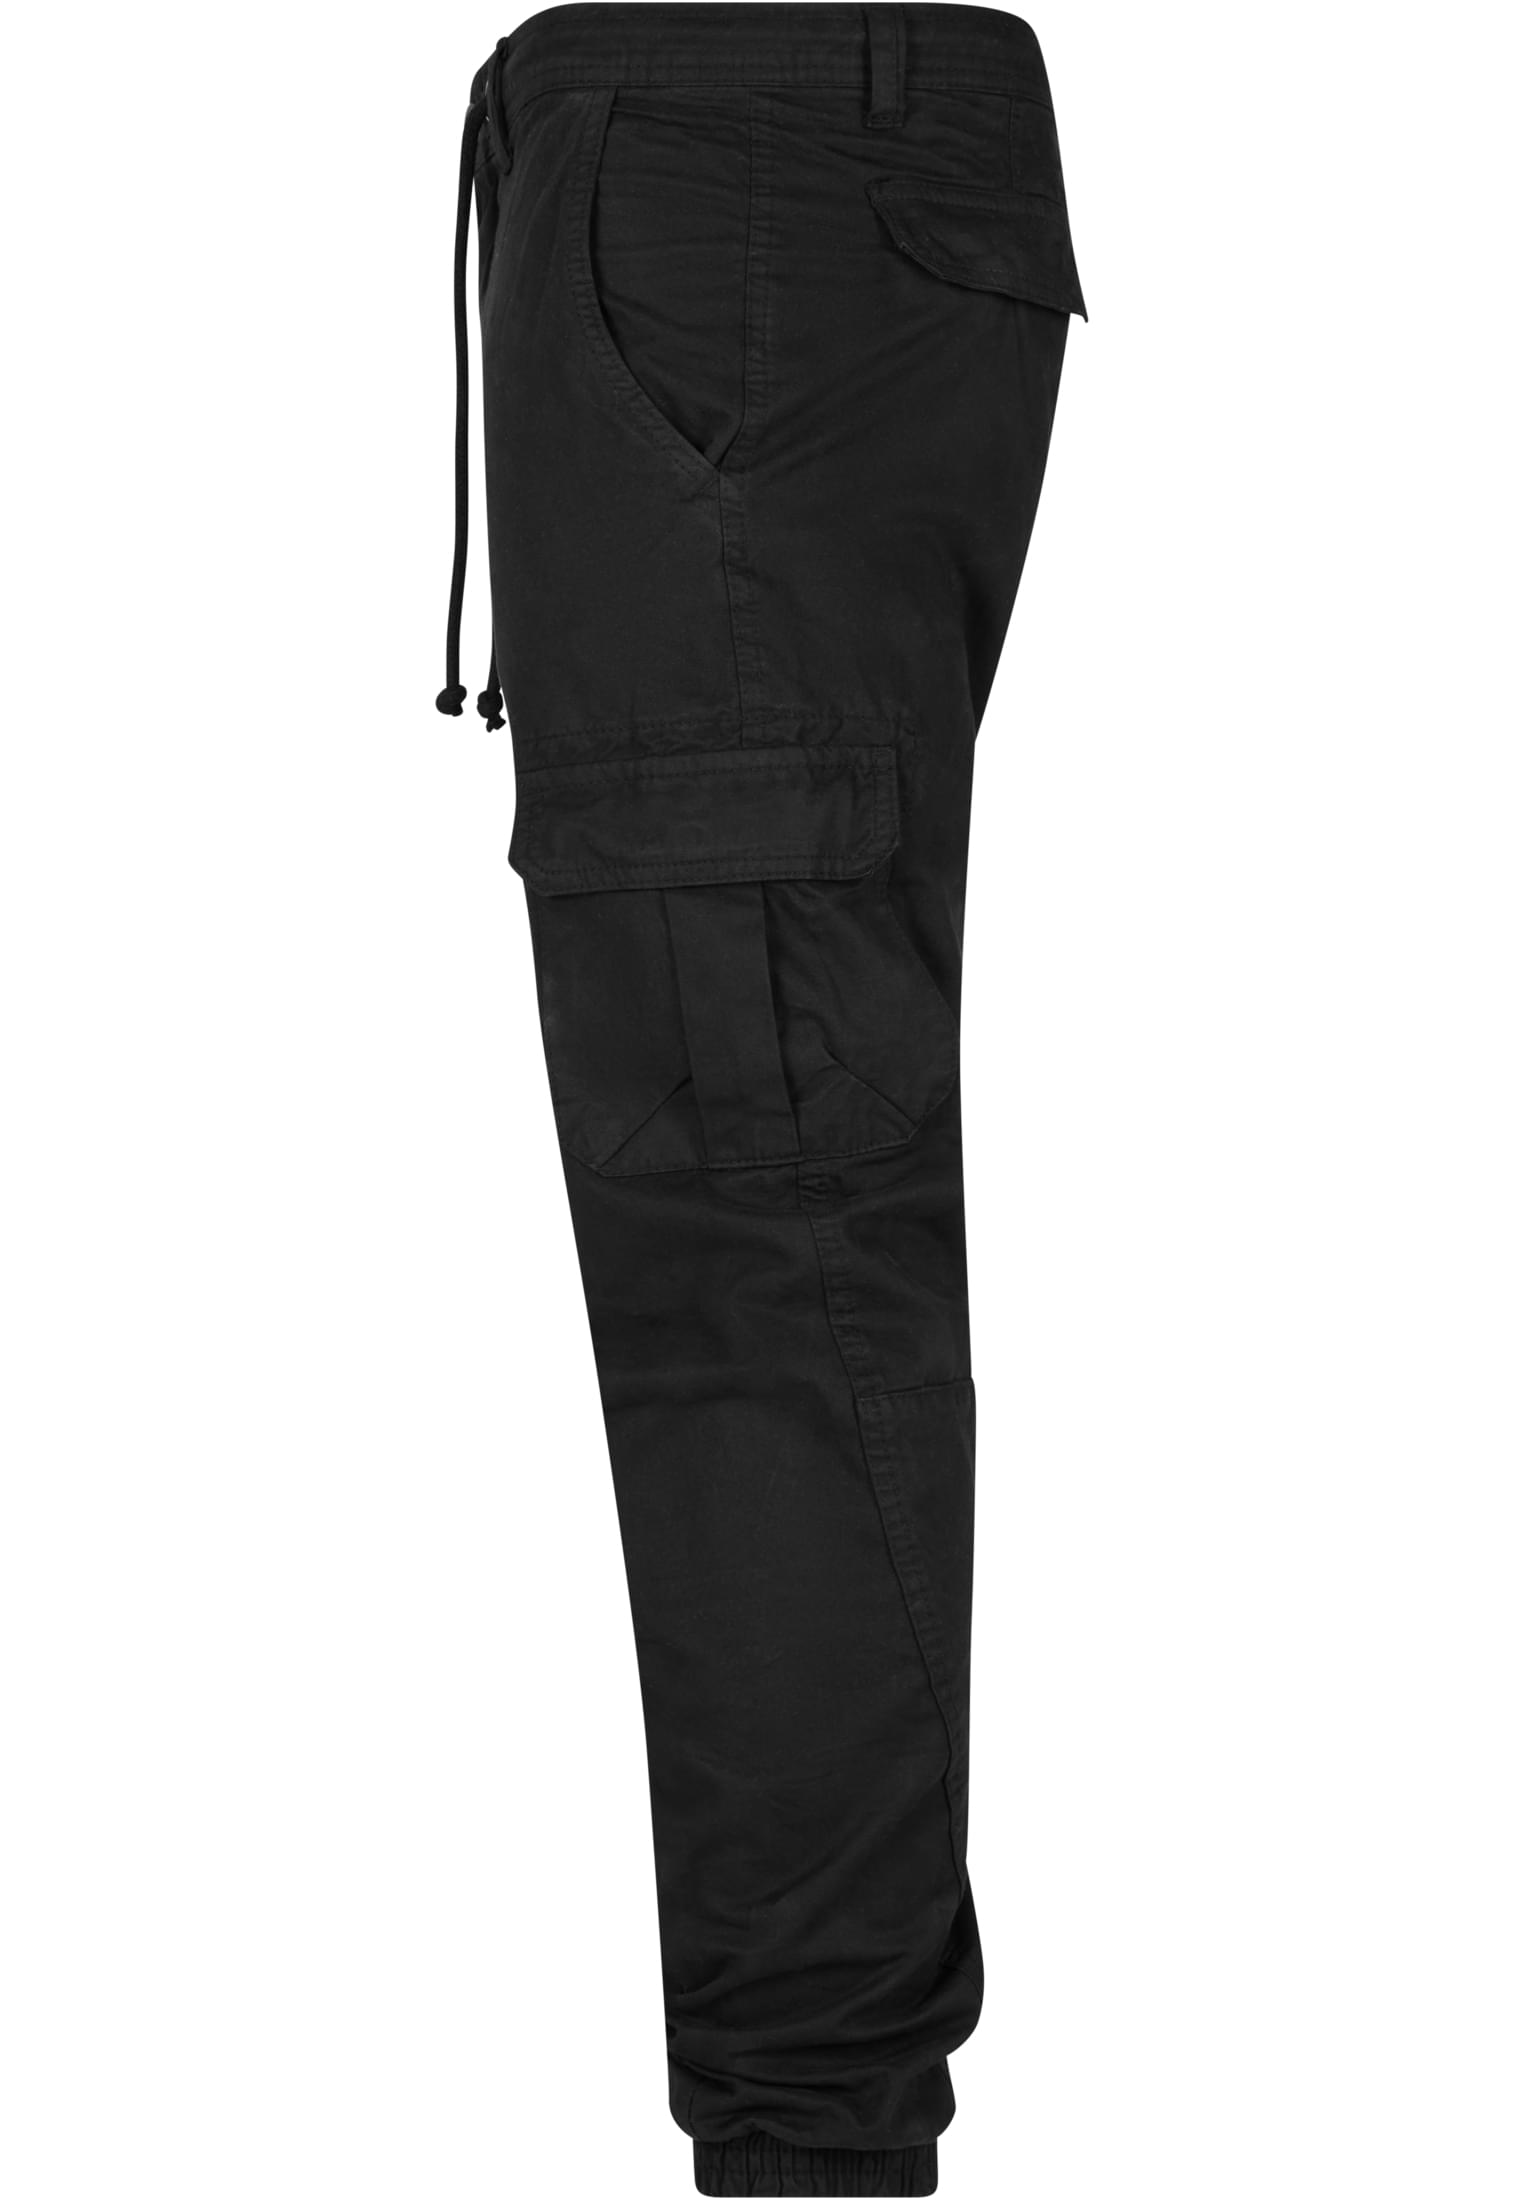 Urban Classics Mens Cargo Trousers Pants Army Cargo Jogging Pants | eBay